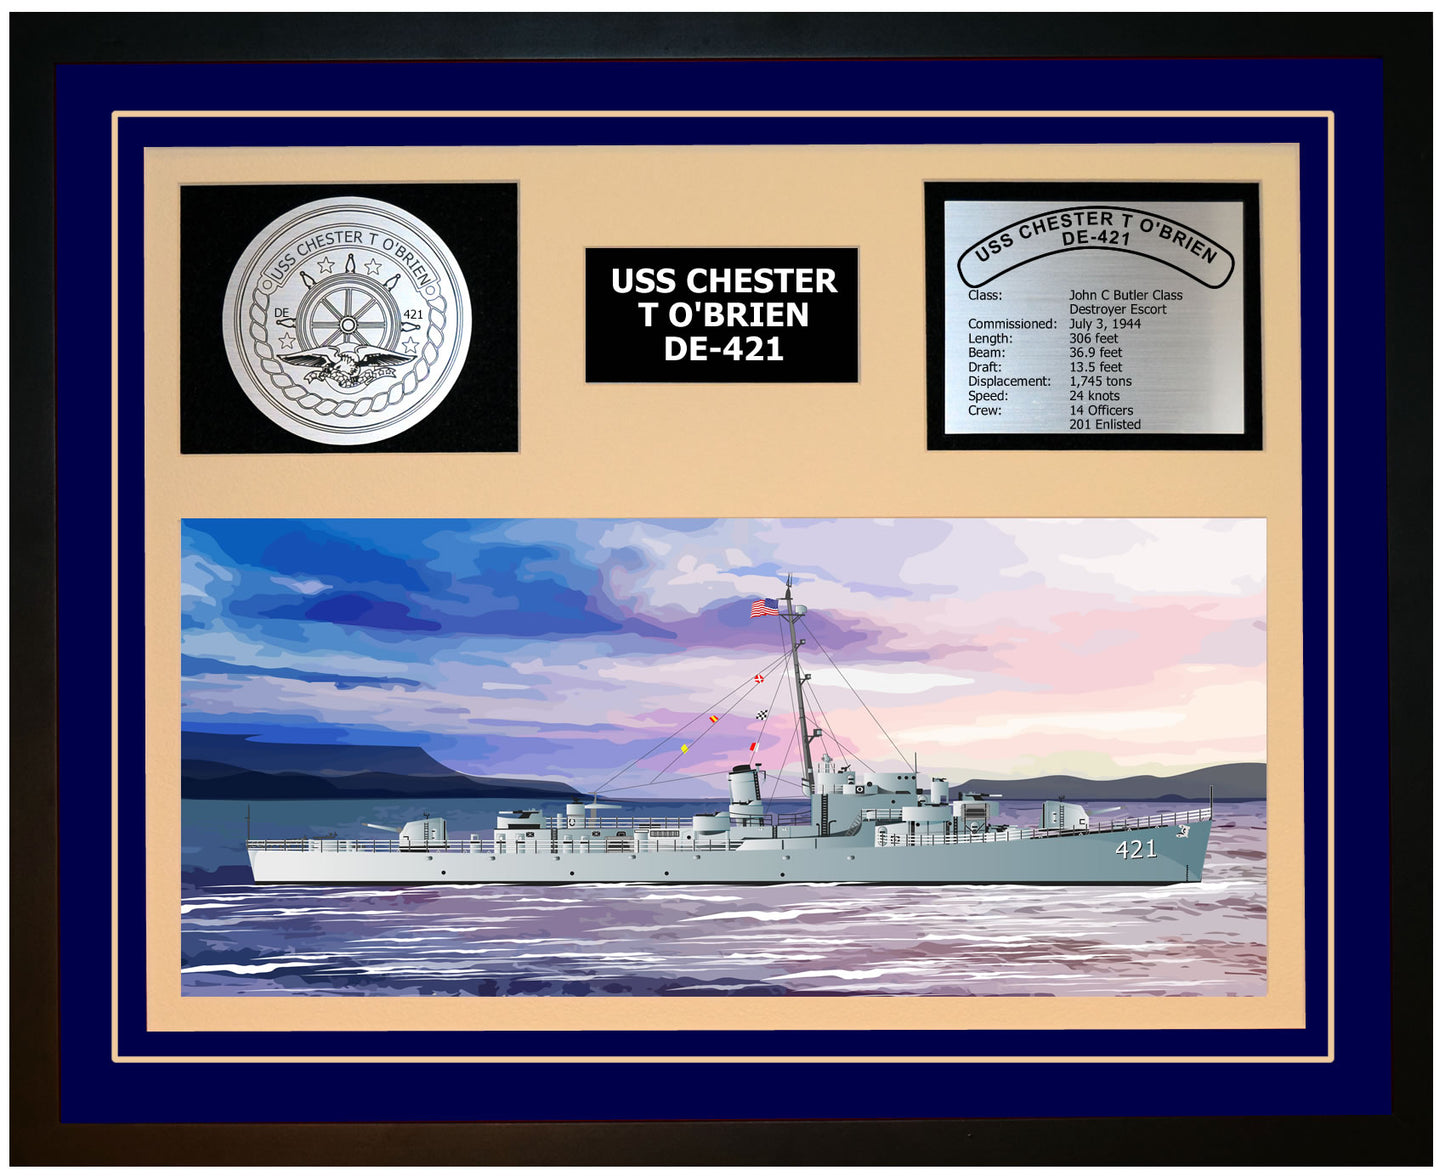 USS CHESTER T OBRIEN DE-421 Framed Navy Ship Display Blue